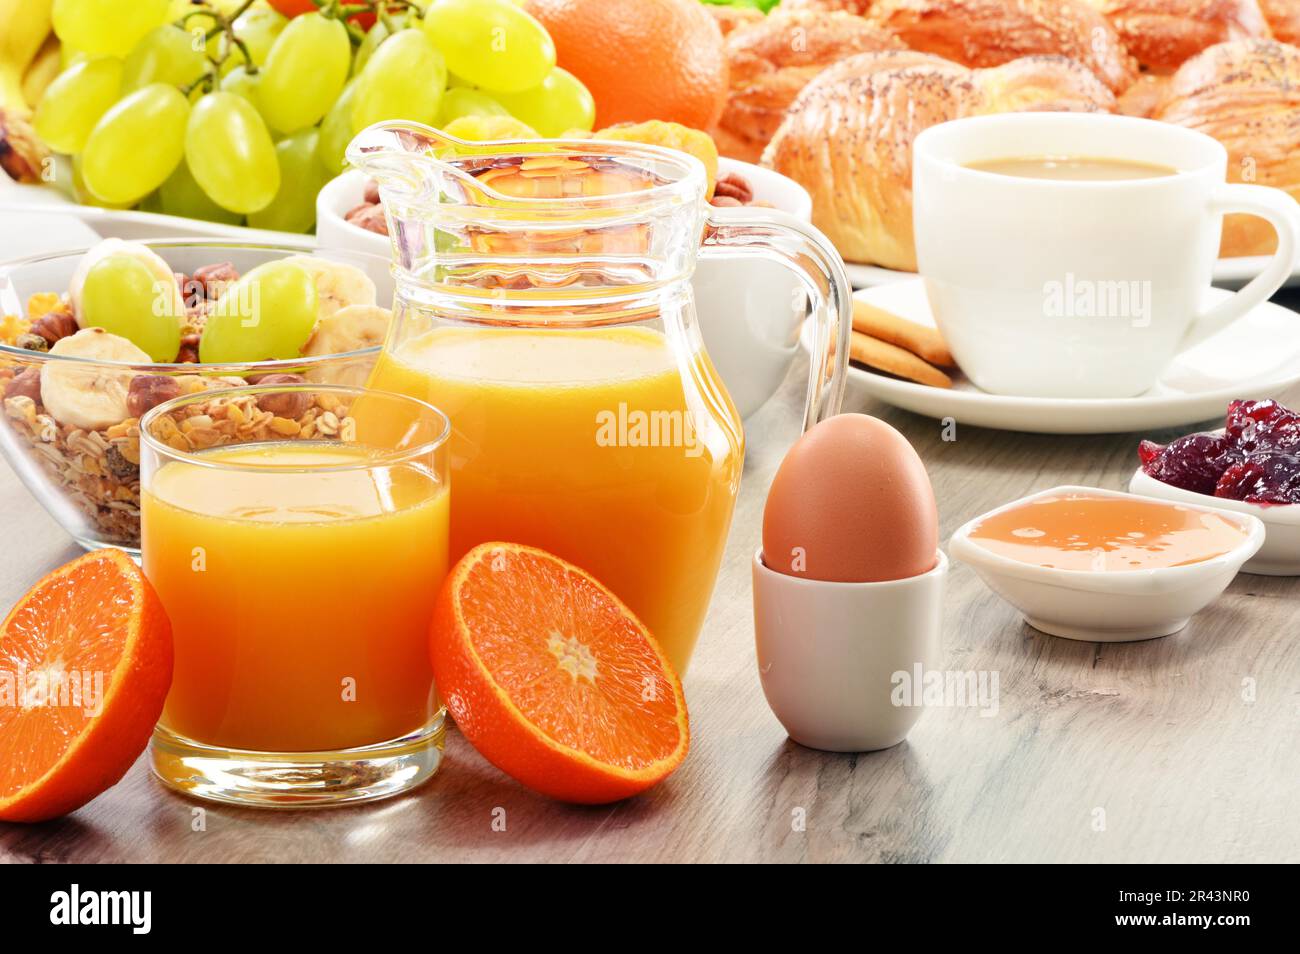 Breakfast including coffee, bread, honey, orange juice, muesli and fruits Stock Photo